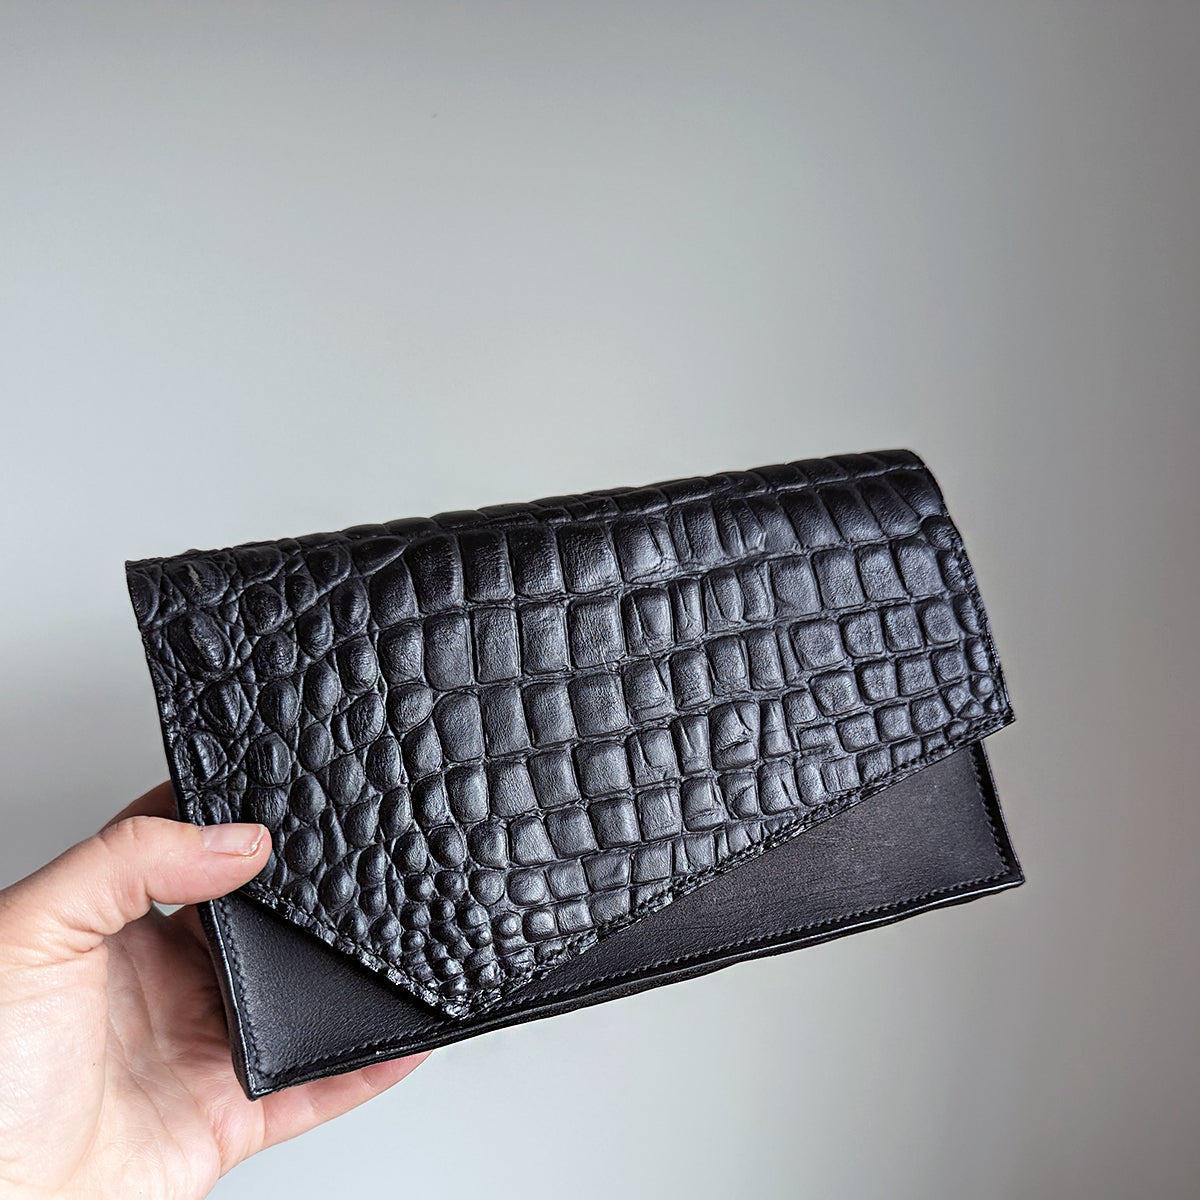 Handsewn Two-Tone Handbag, Black Croc/Matte Black Leather